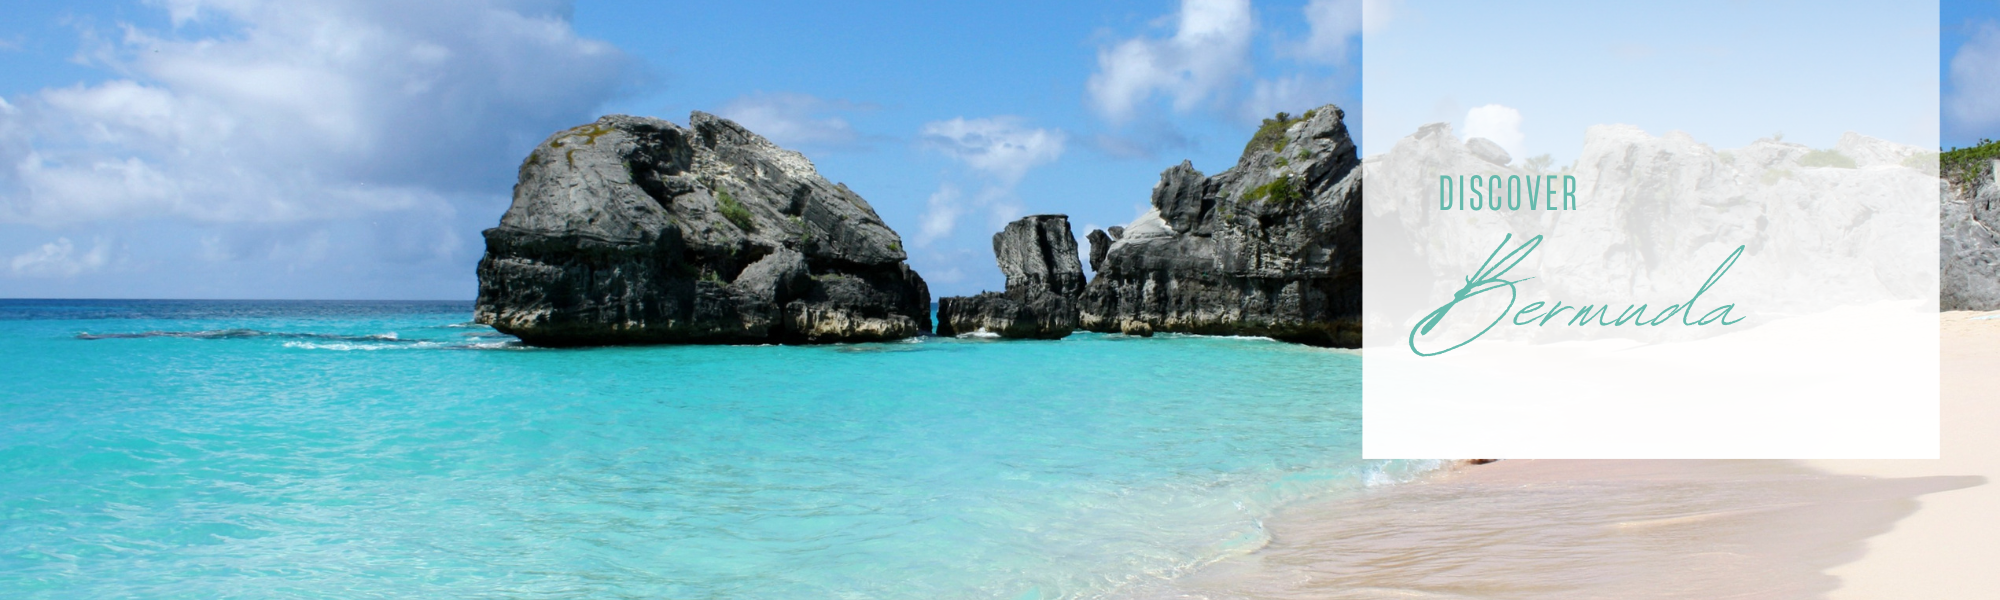 large rocks in turquoise water on beach in Bermuda